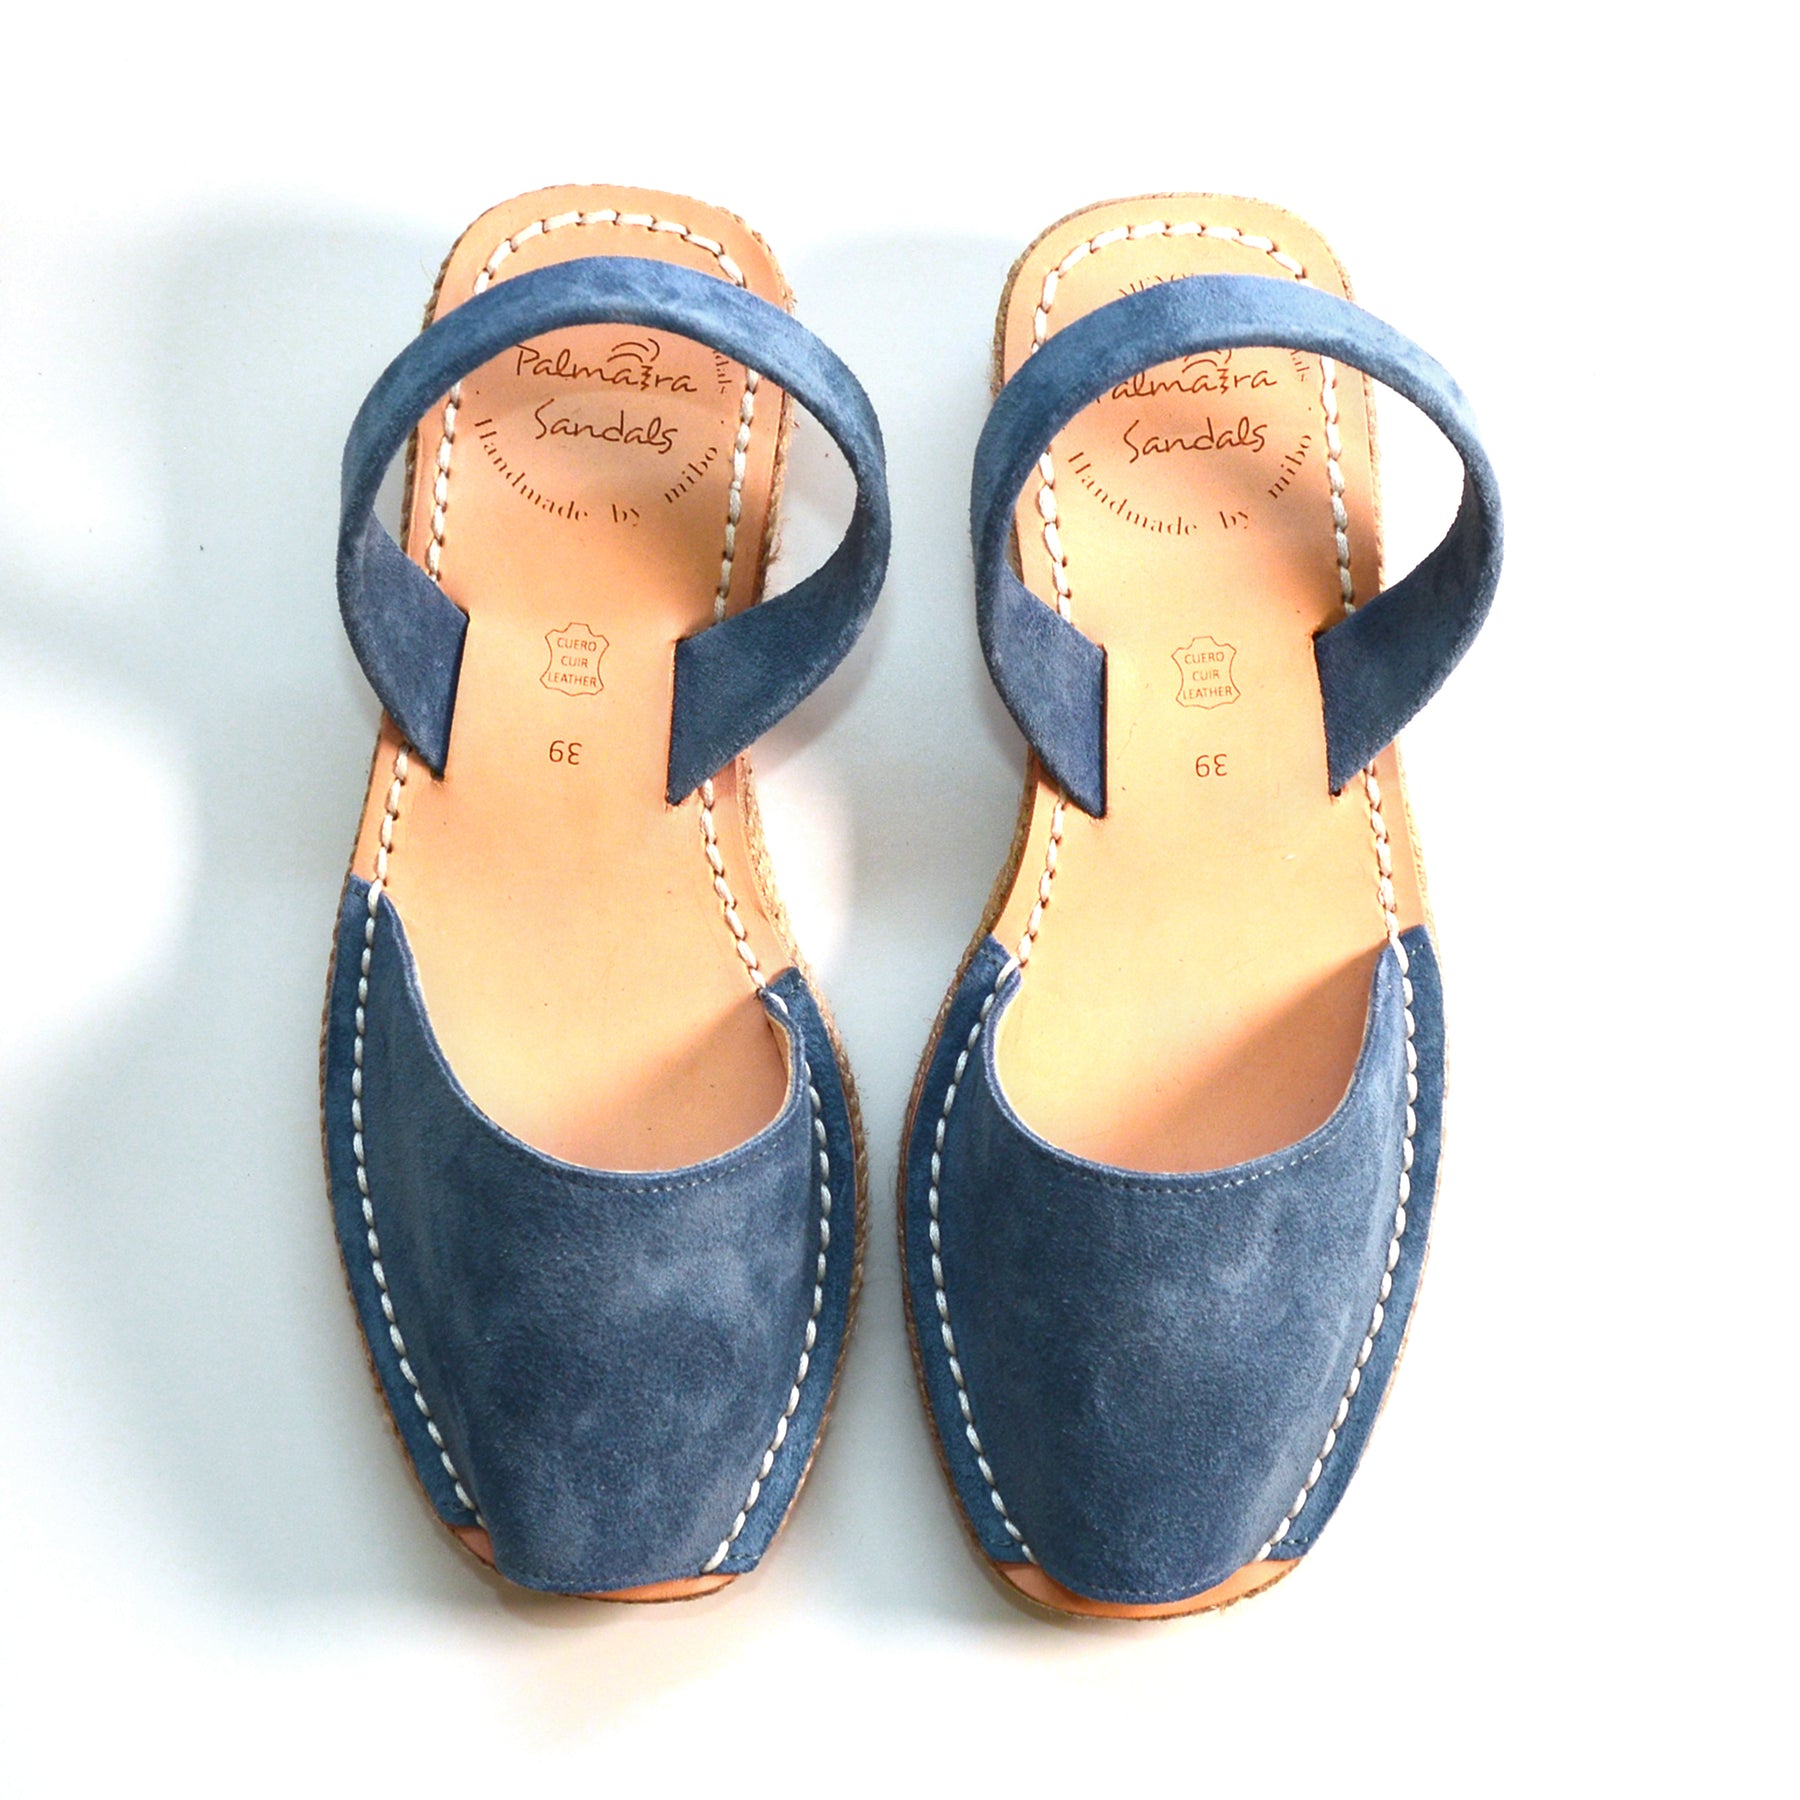 denim blue suede low wedge espadrille slingback avarcas sandals